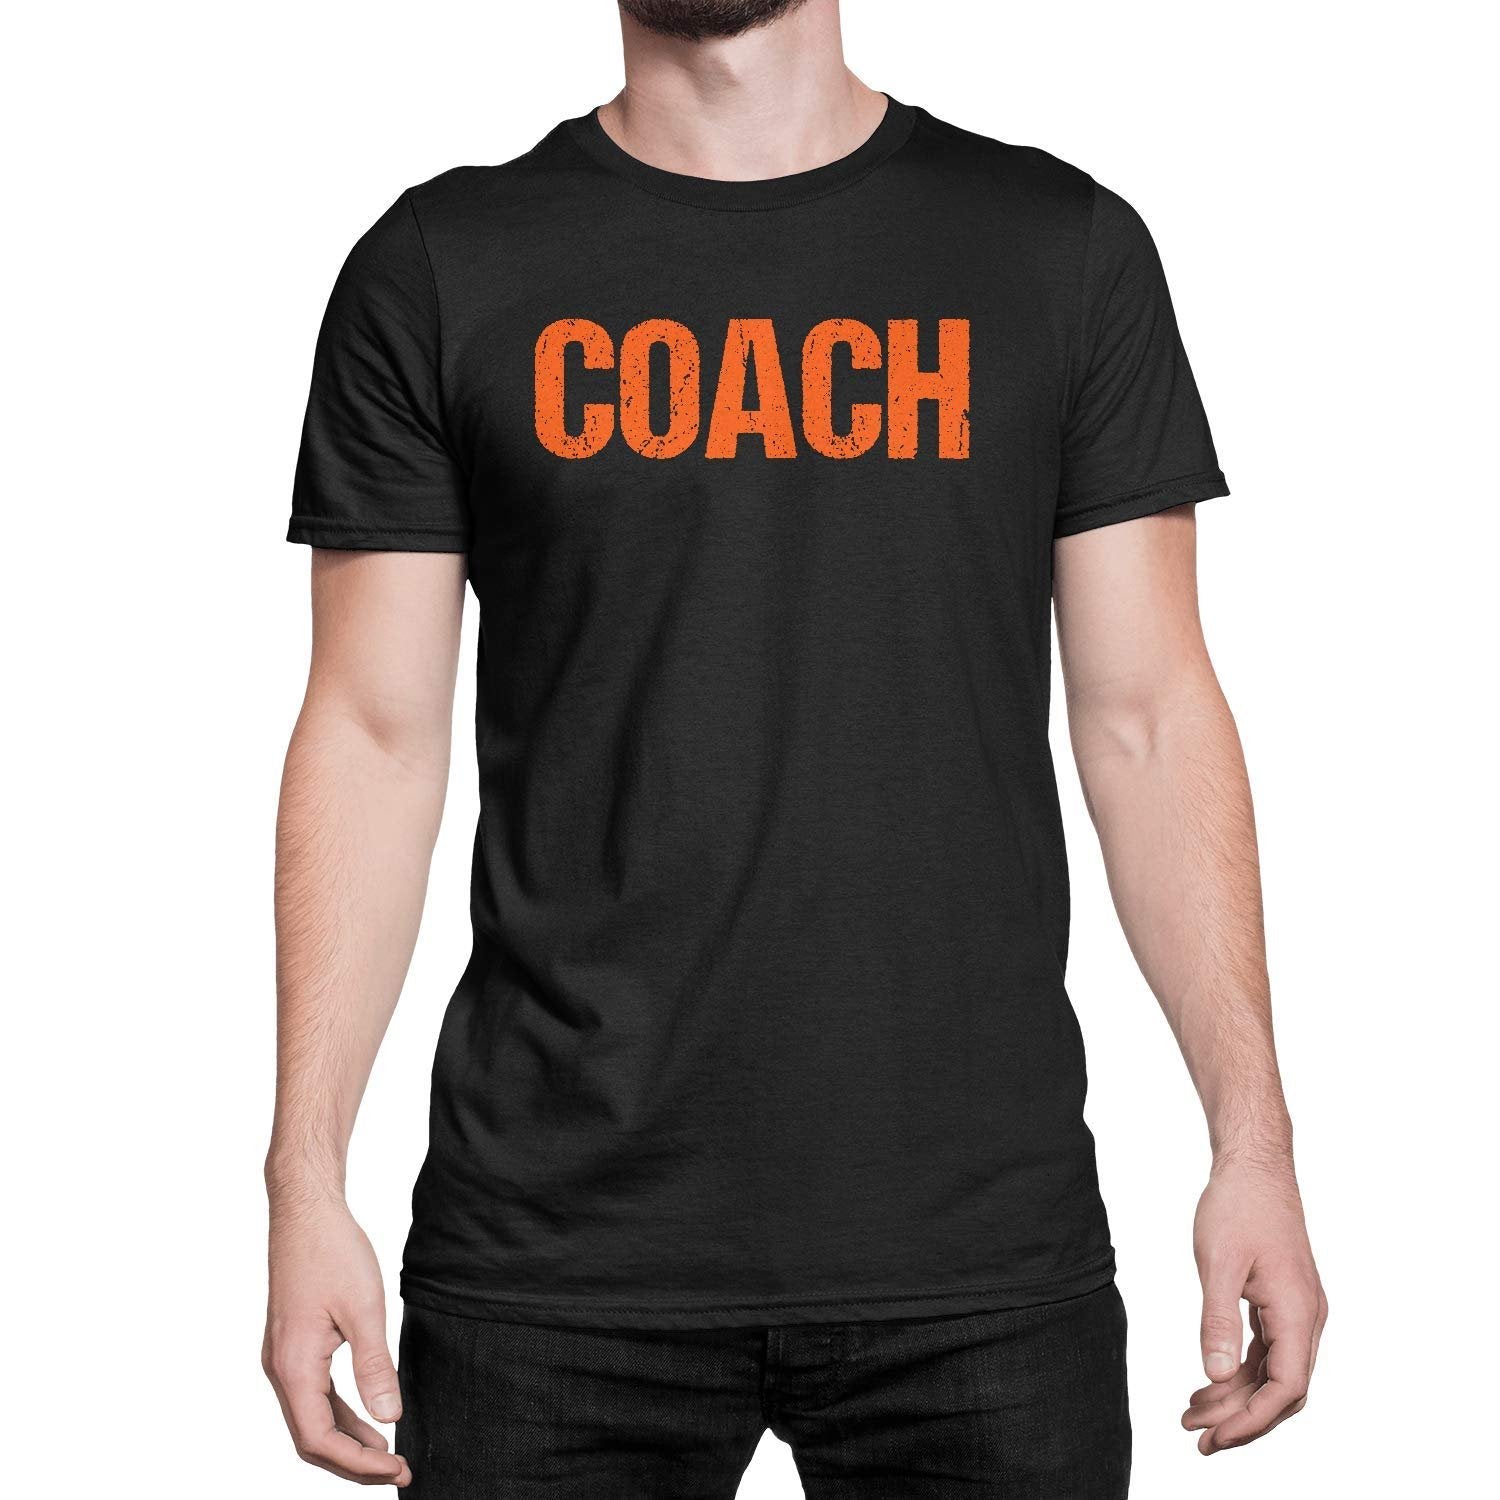 Coach T-Shirt Sports Coaching Tee Shirt (Black & Orange, Distressed)